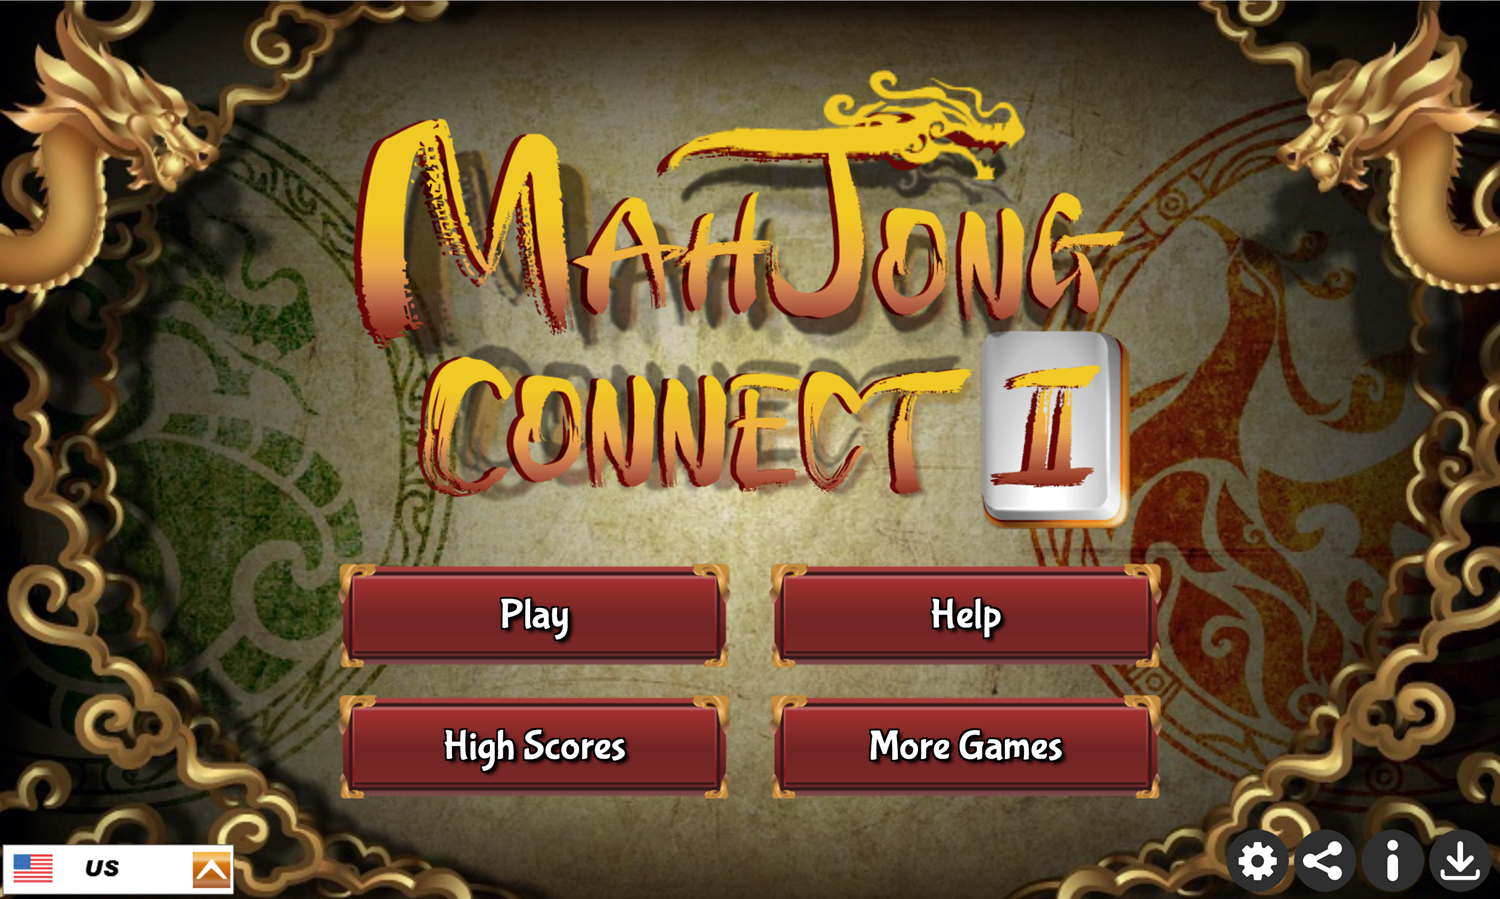 Mahjong Connect 2 Game Welcome Screen Screenshot.